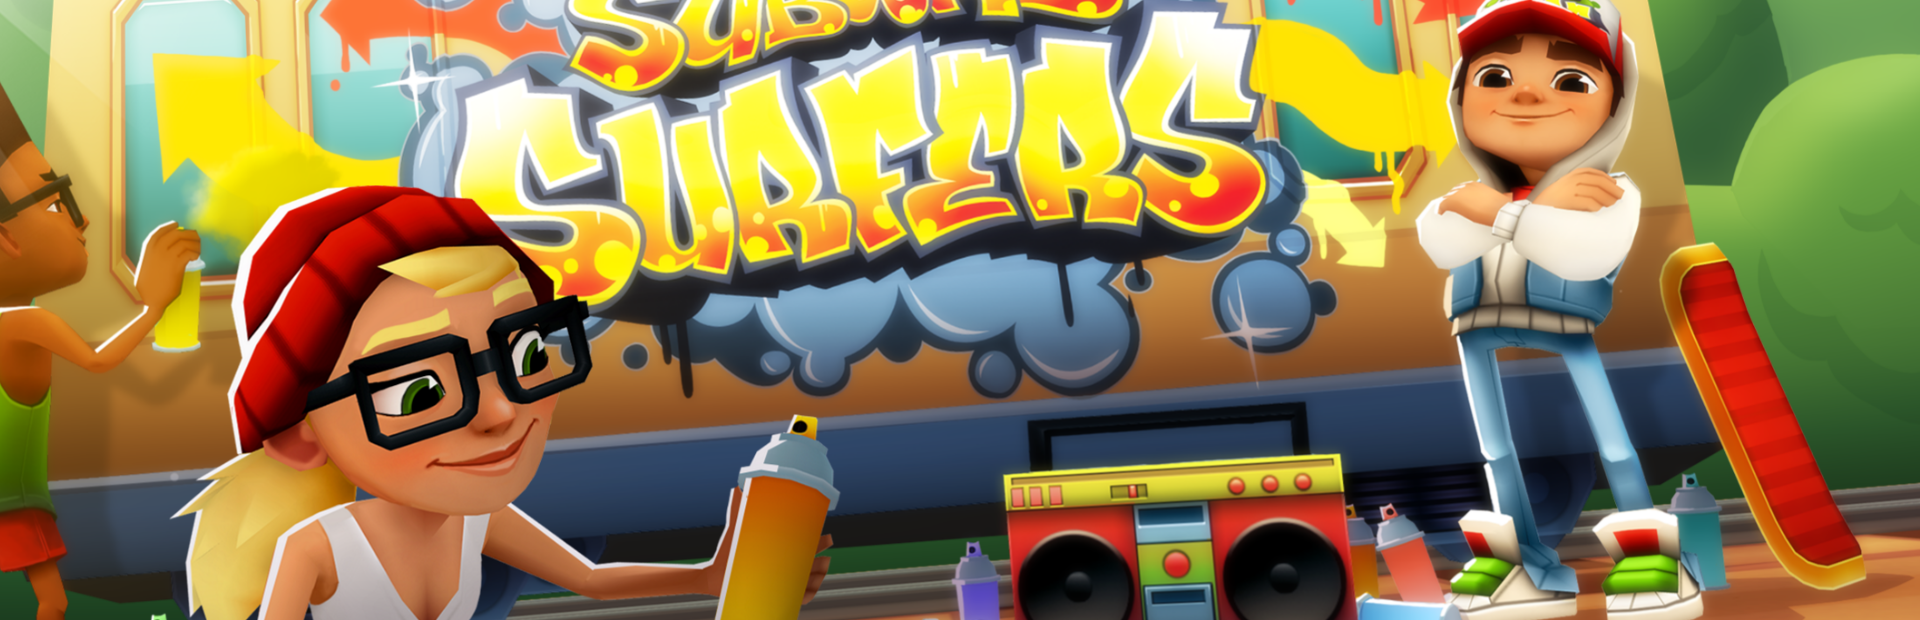 Subway Surfers - SteamGridDB